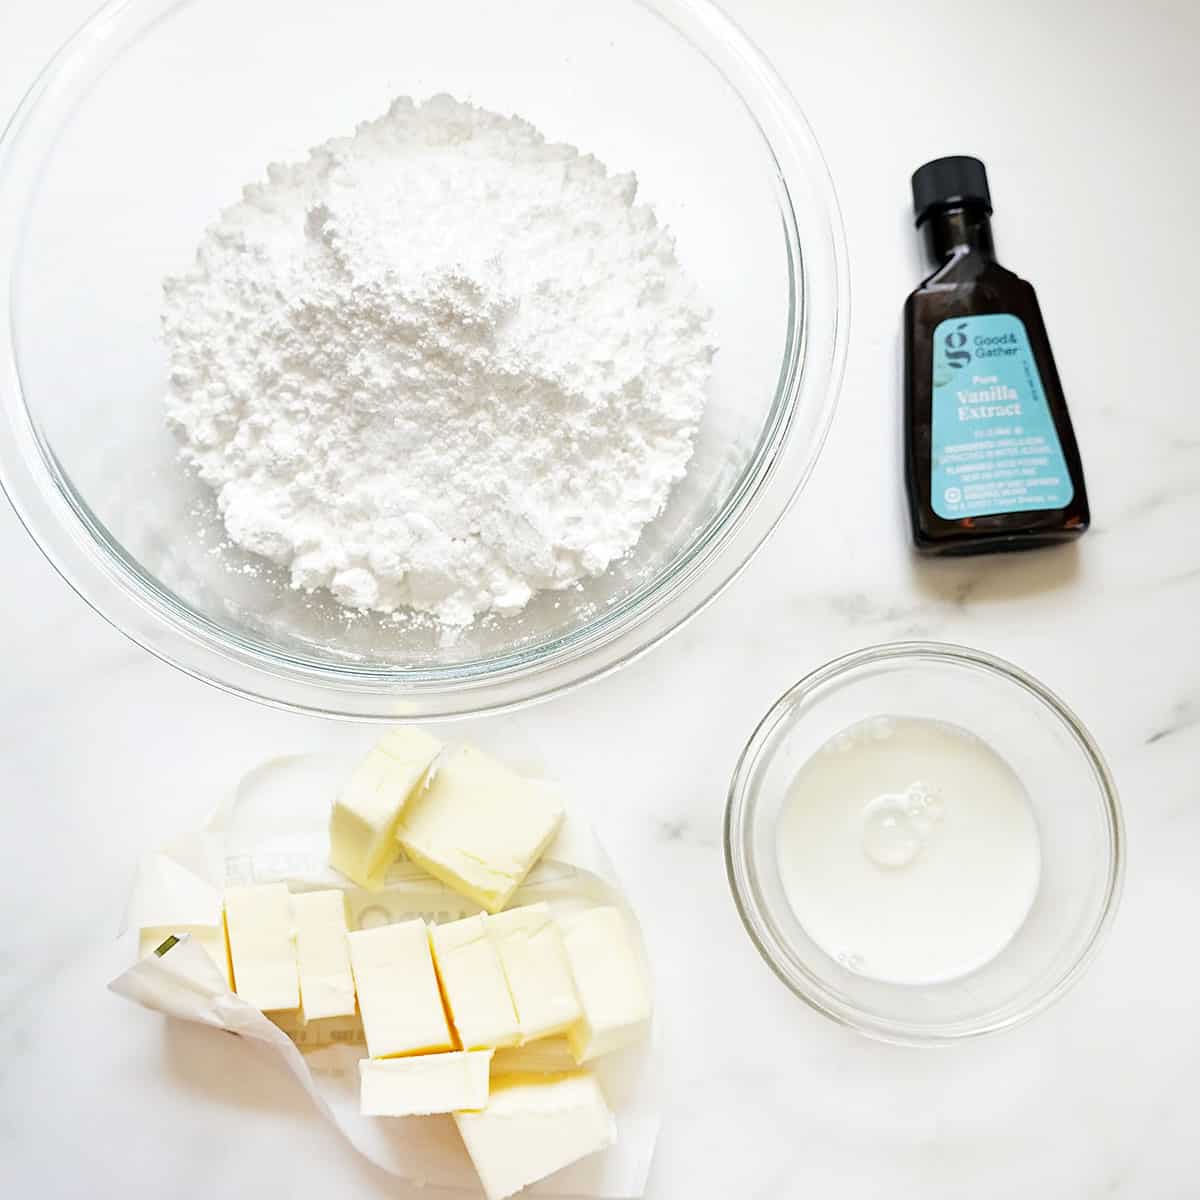 buttercream frosting ingredients powdered sugar, butter, milk, vanilla extract